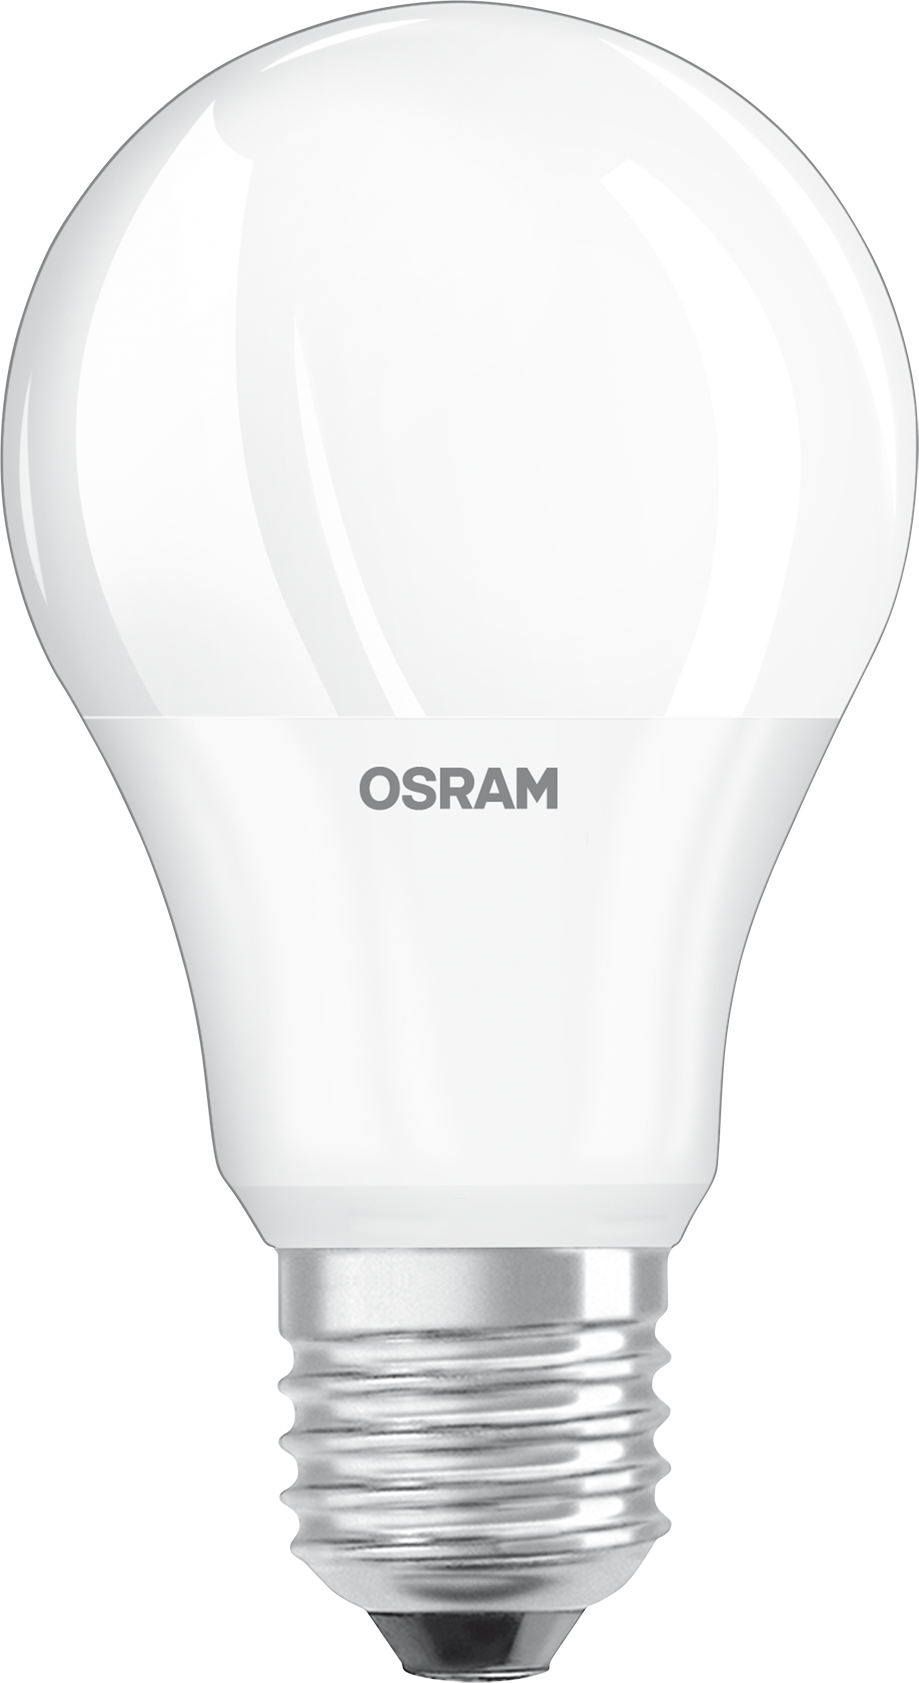 OSRAM LED-Lampe Retrofit Classic A E27, 8.5W, 806lm, warmweiss - Lampen, Leuchten